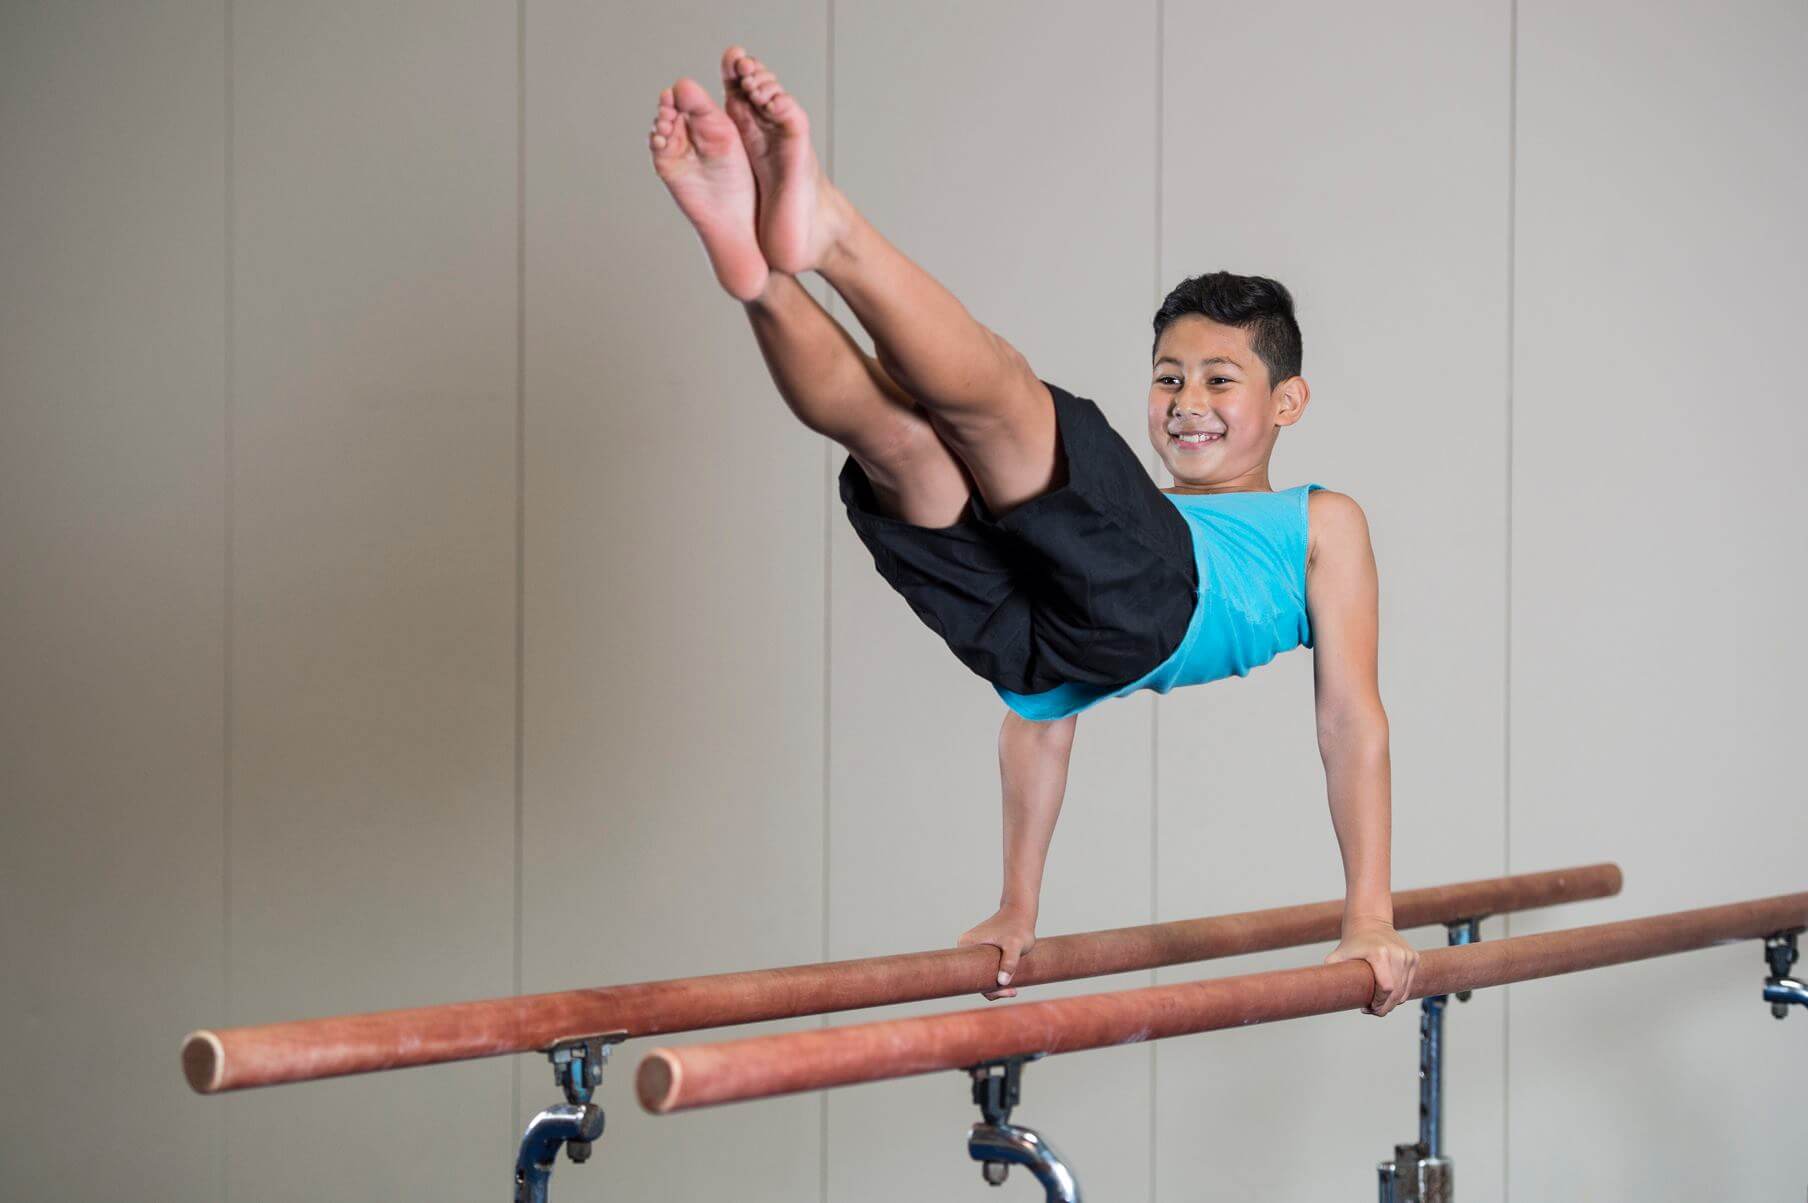 Young boy doing gymnastics